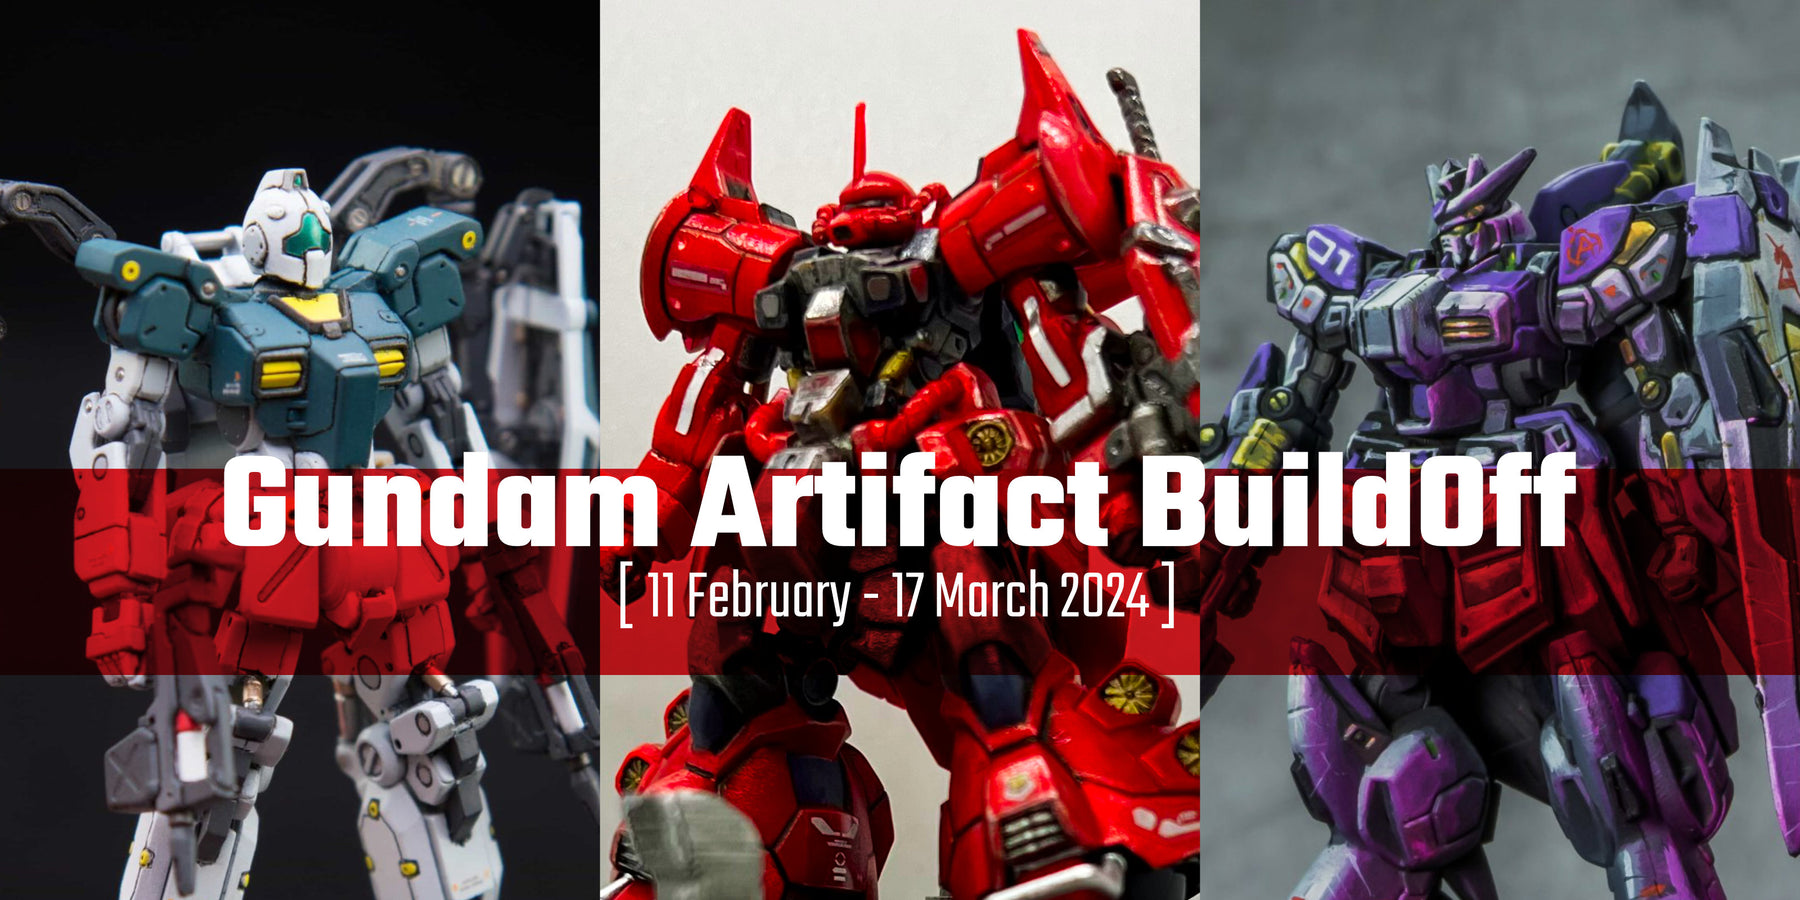 Announcing Gundam Artifact BuildOff Competition!